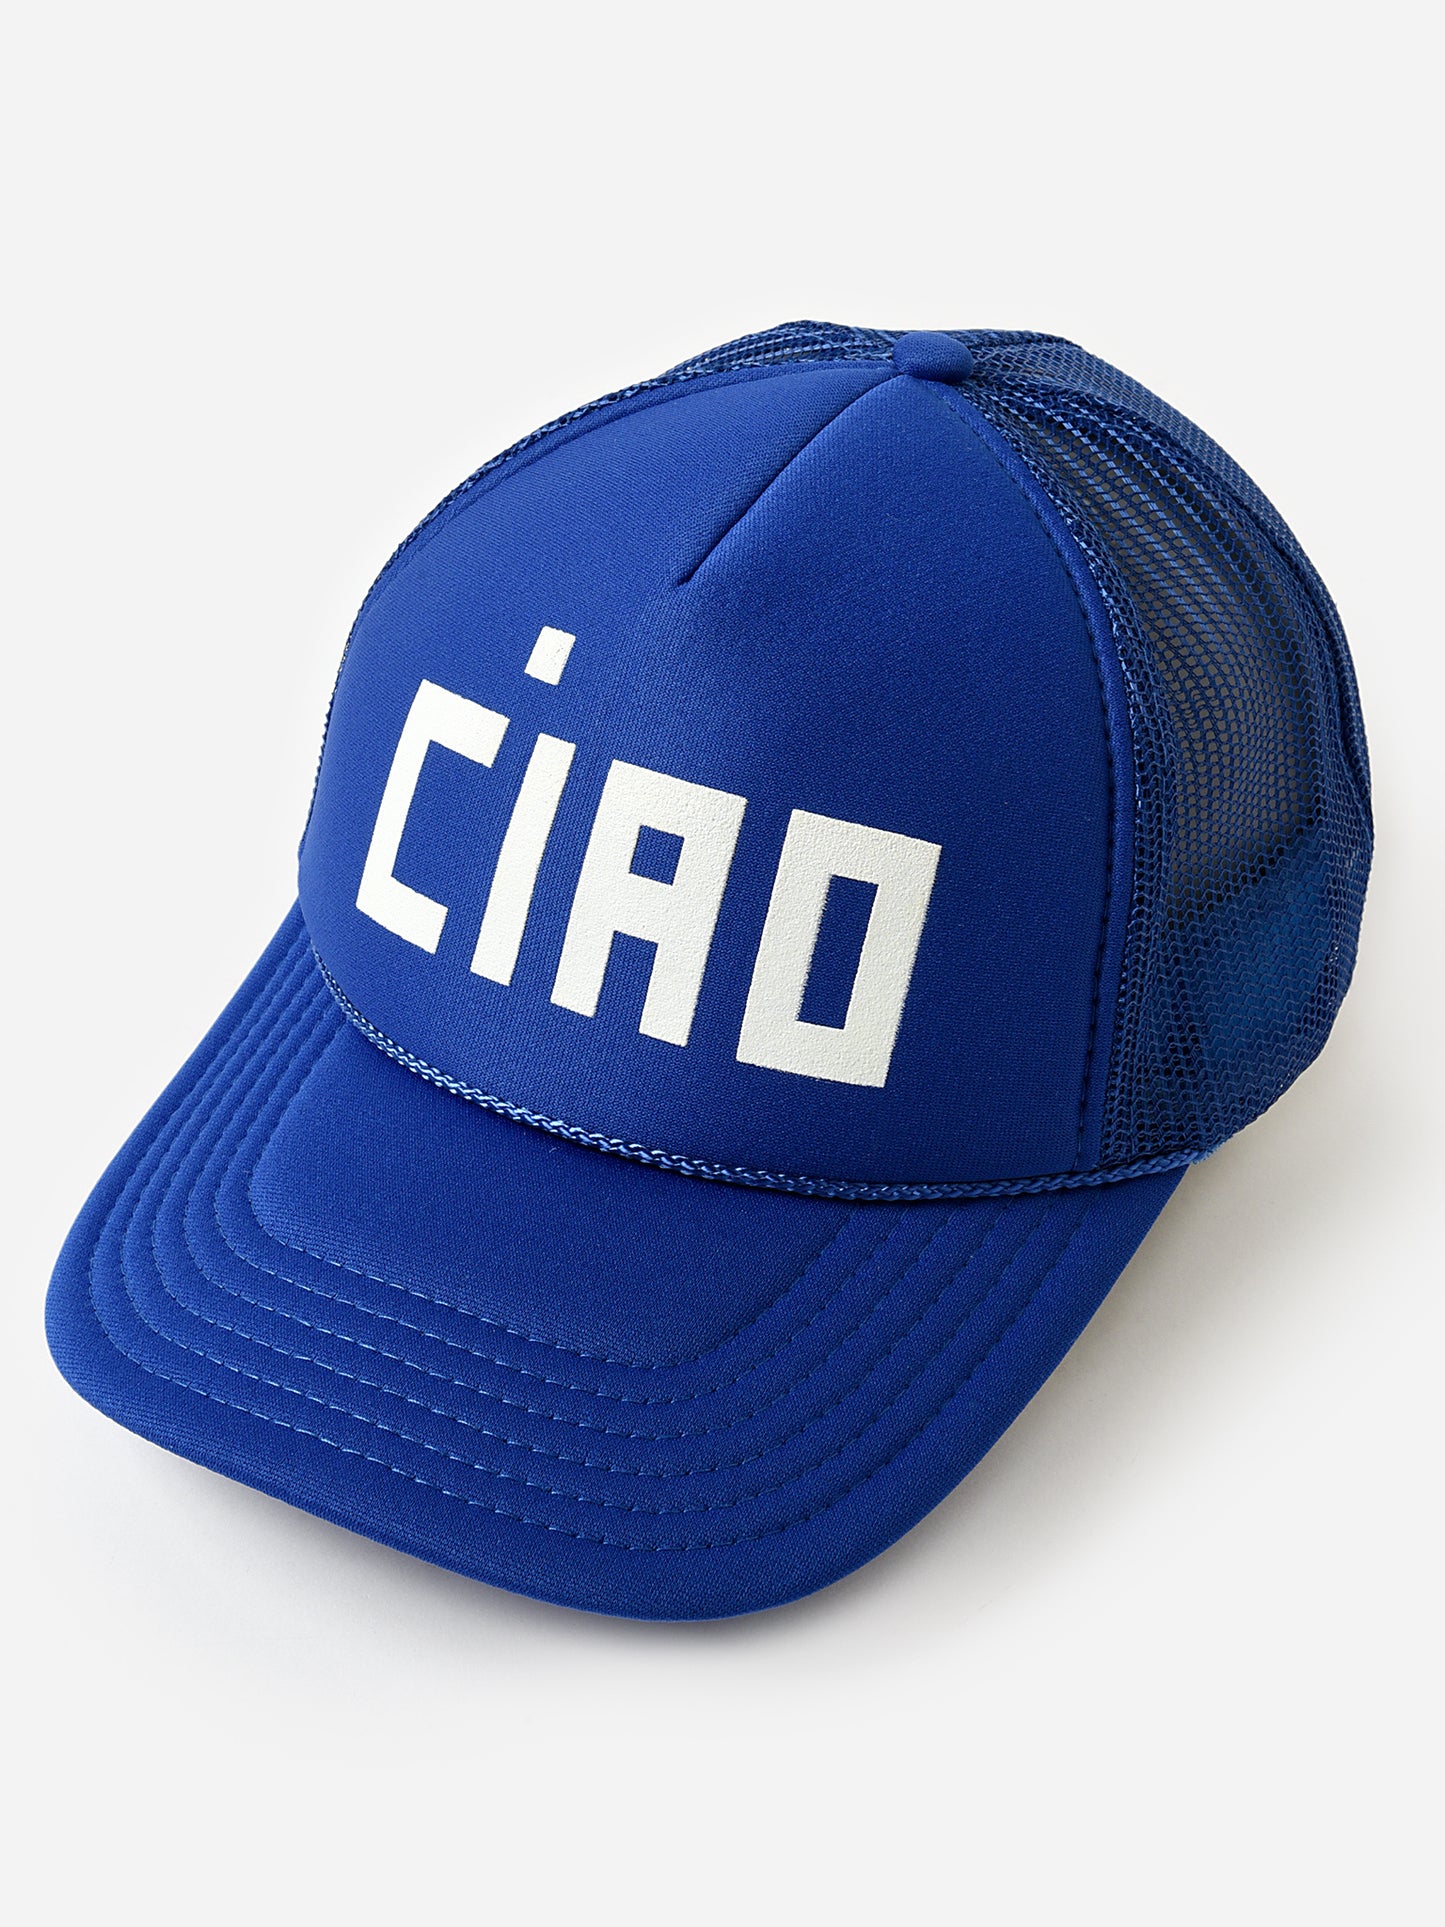 Clare V. Women's Ciao Trucker Hat